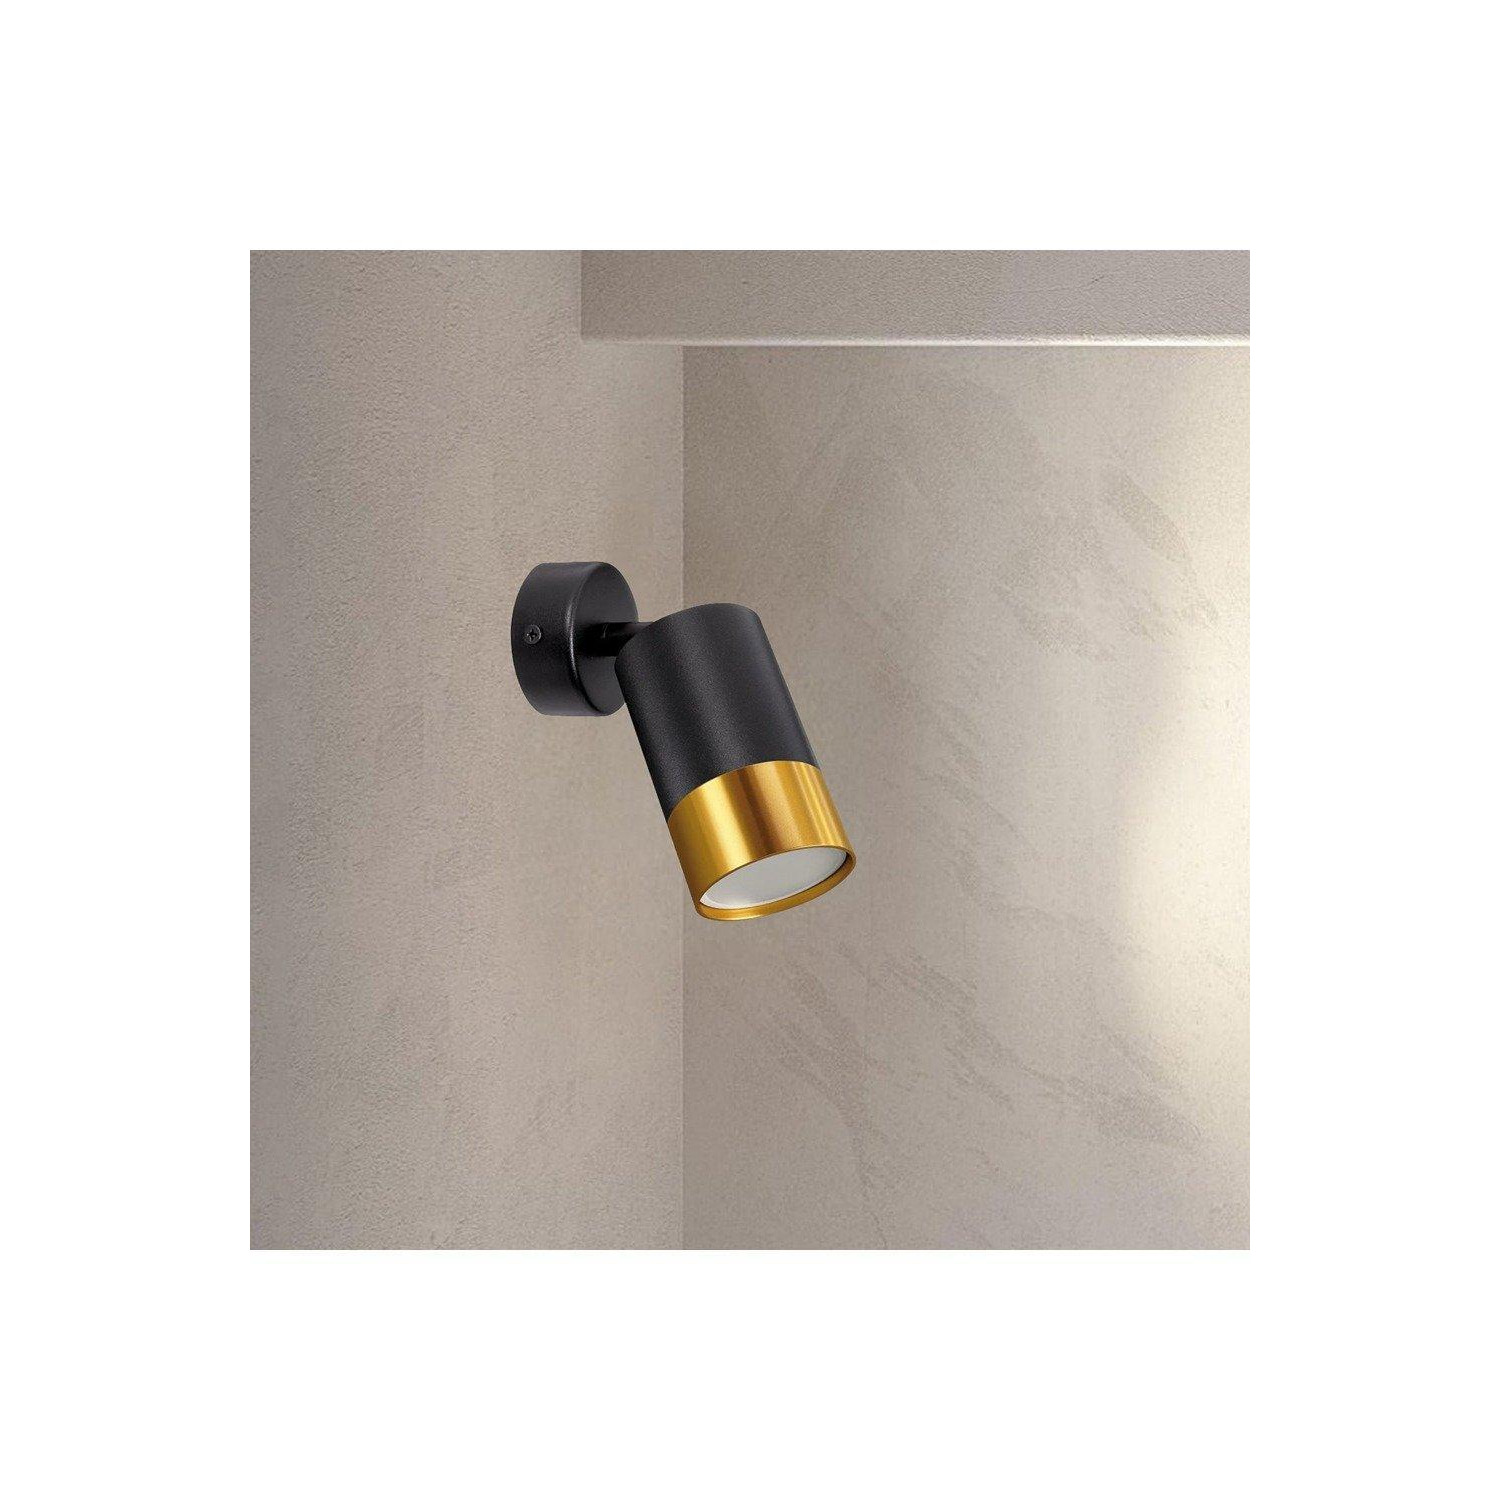 'Puzon' Black GU10 Adjustable Surface Ceiling Downlight Flush Spot light with Gold Bezel - image 1